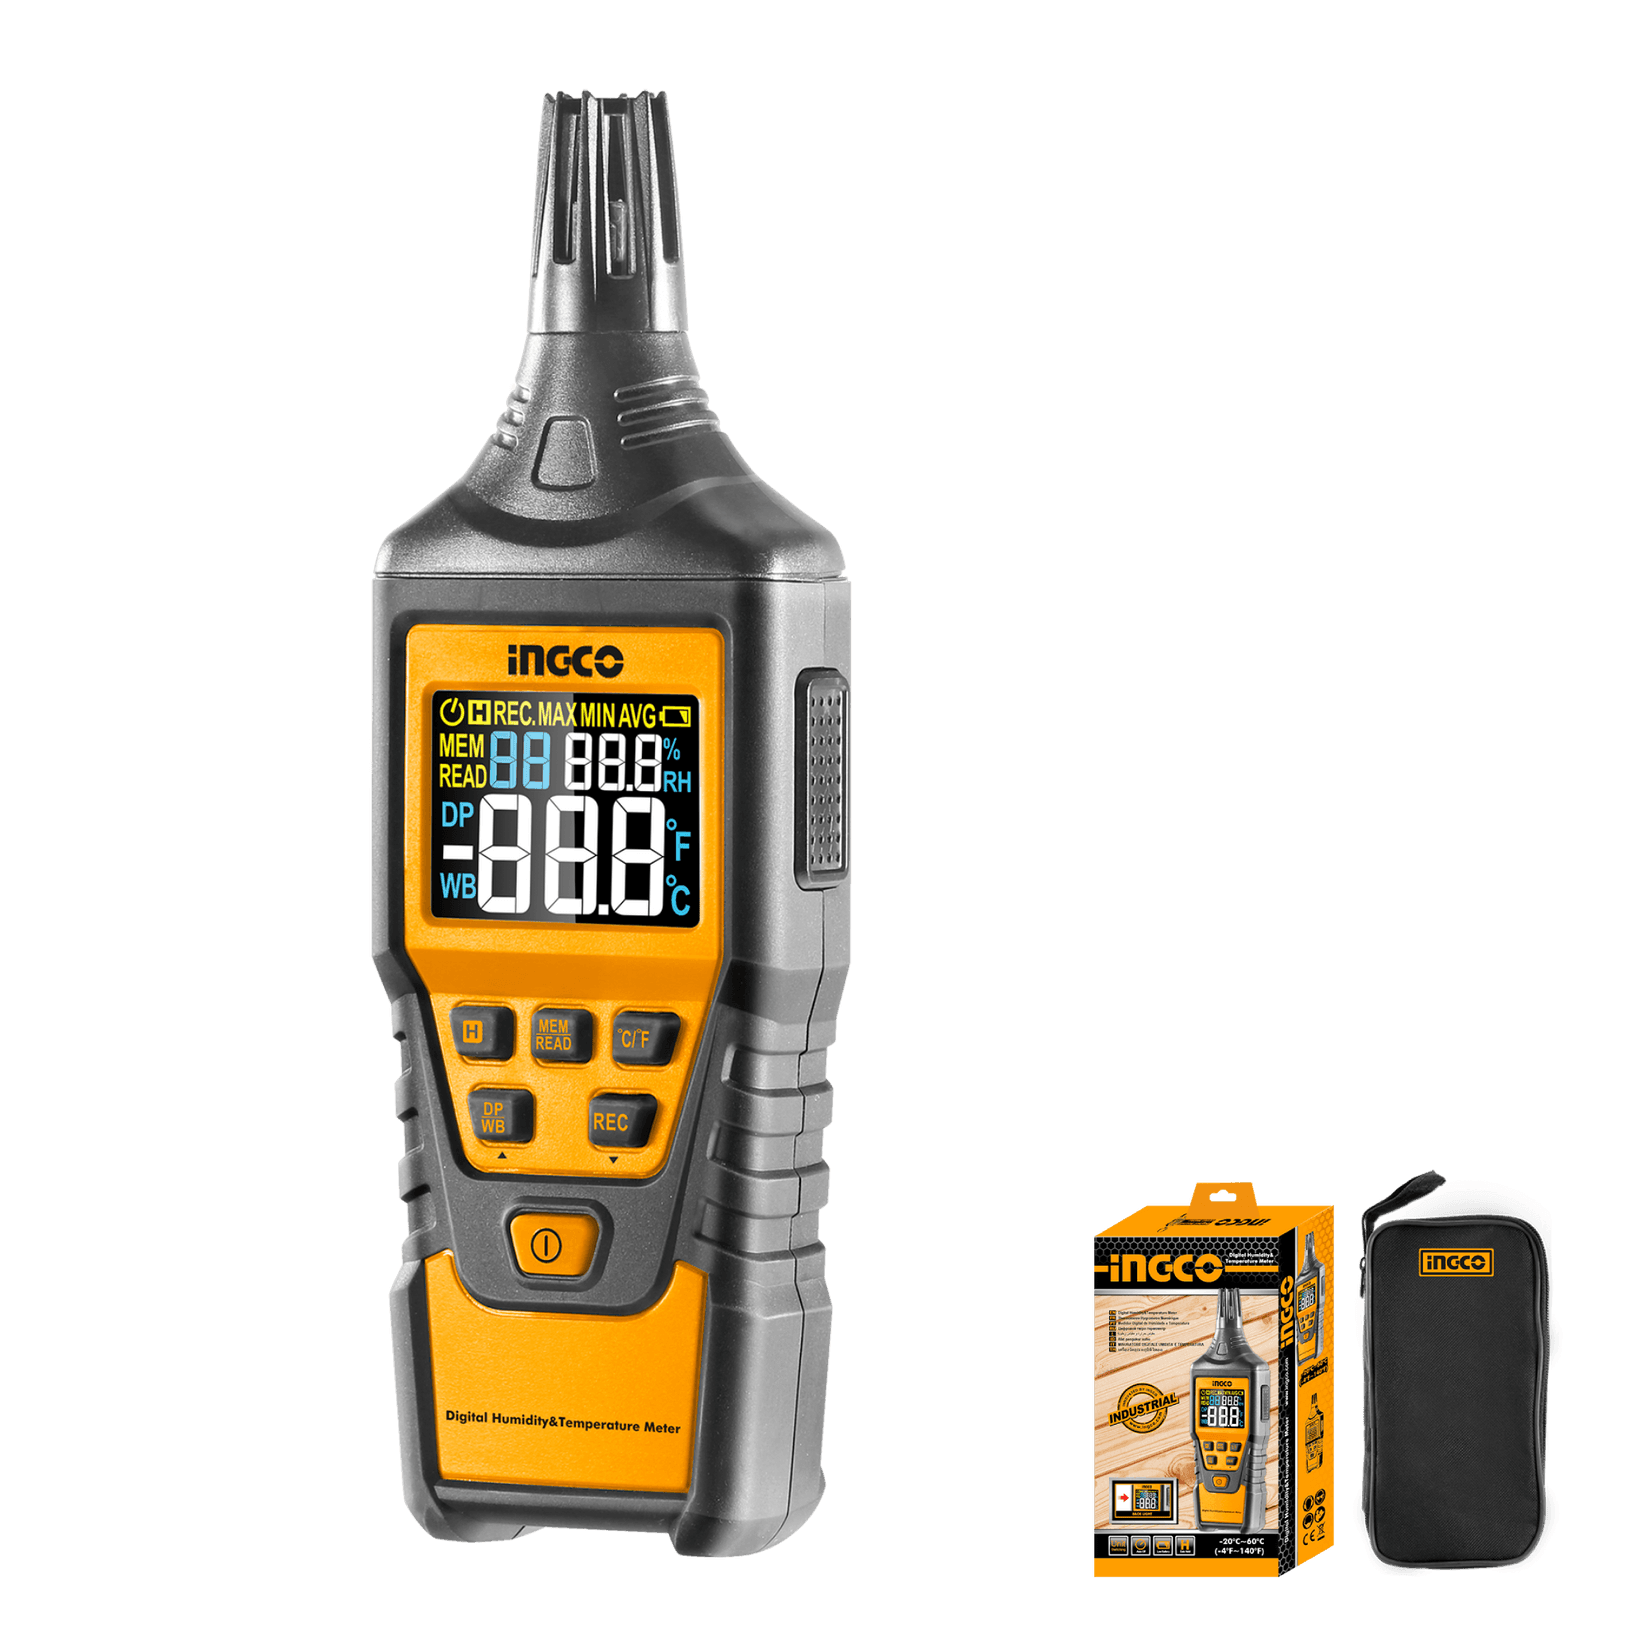 INGCO Digitalni merač vlažnosti i temperature HETHT01